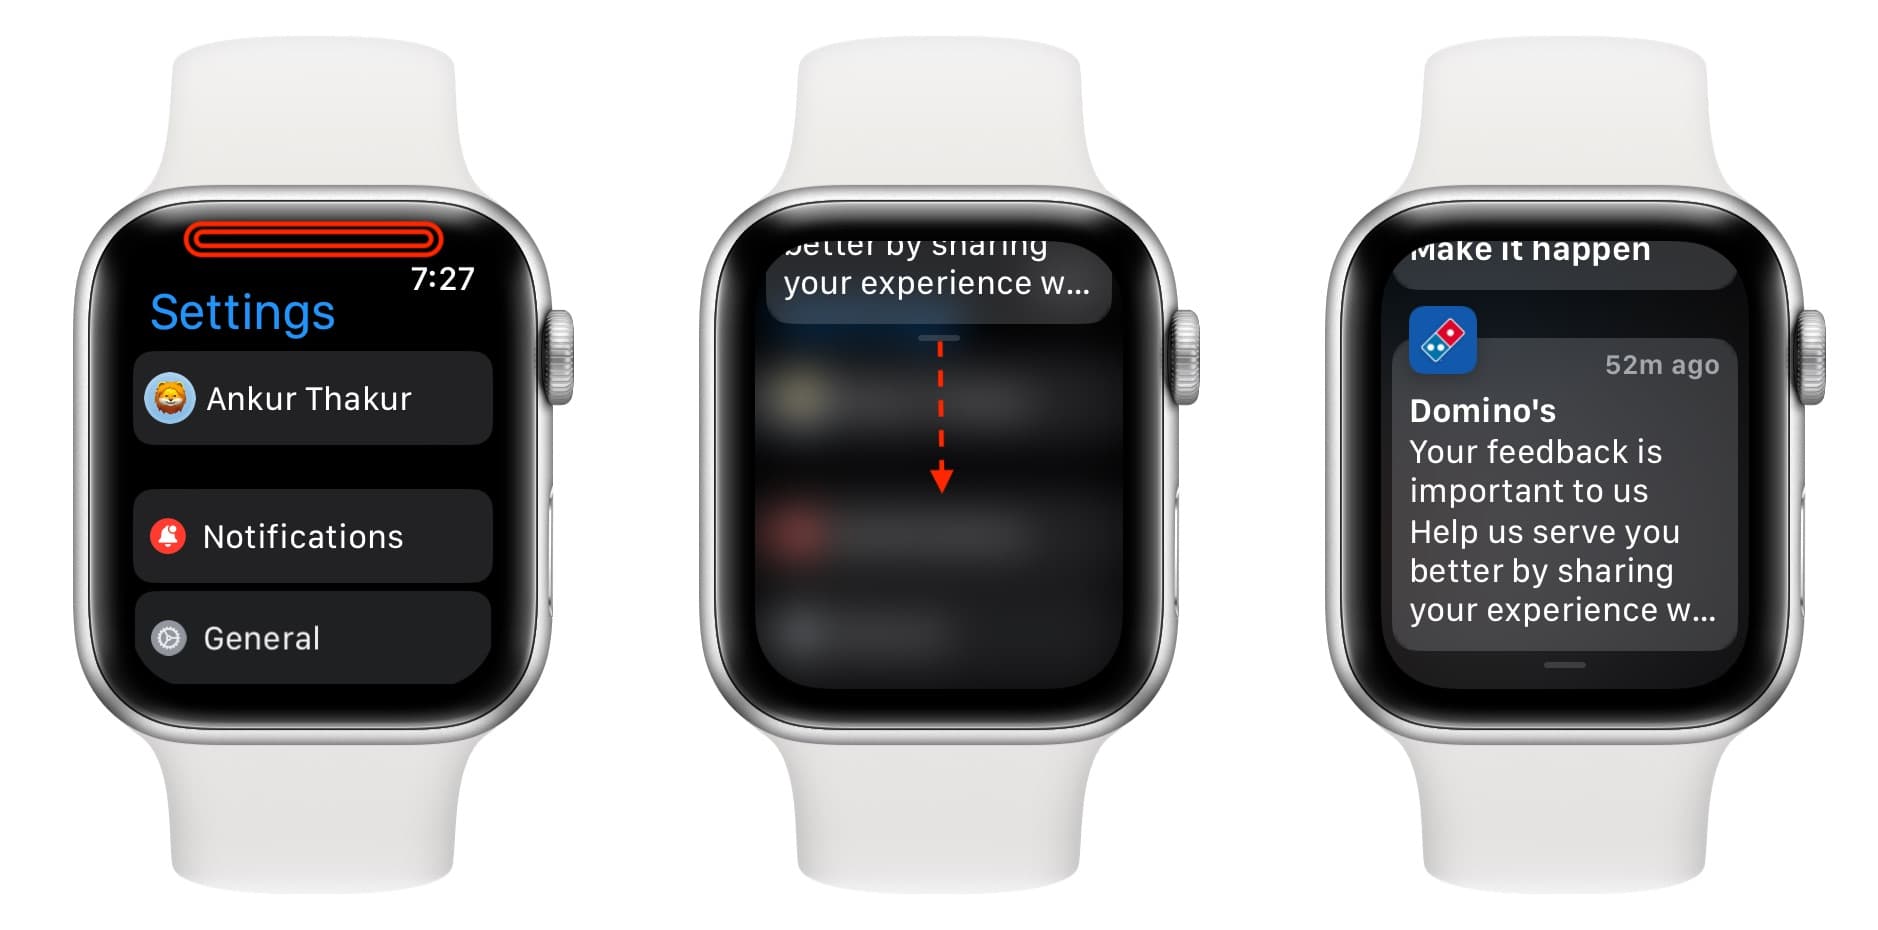 Opening Notifications Center on Apple Watch when inside an app